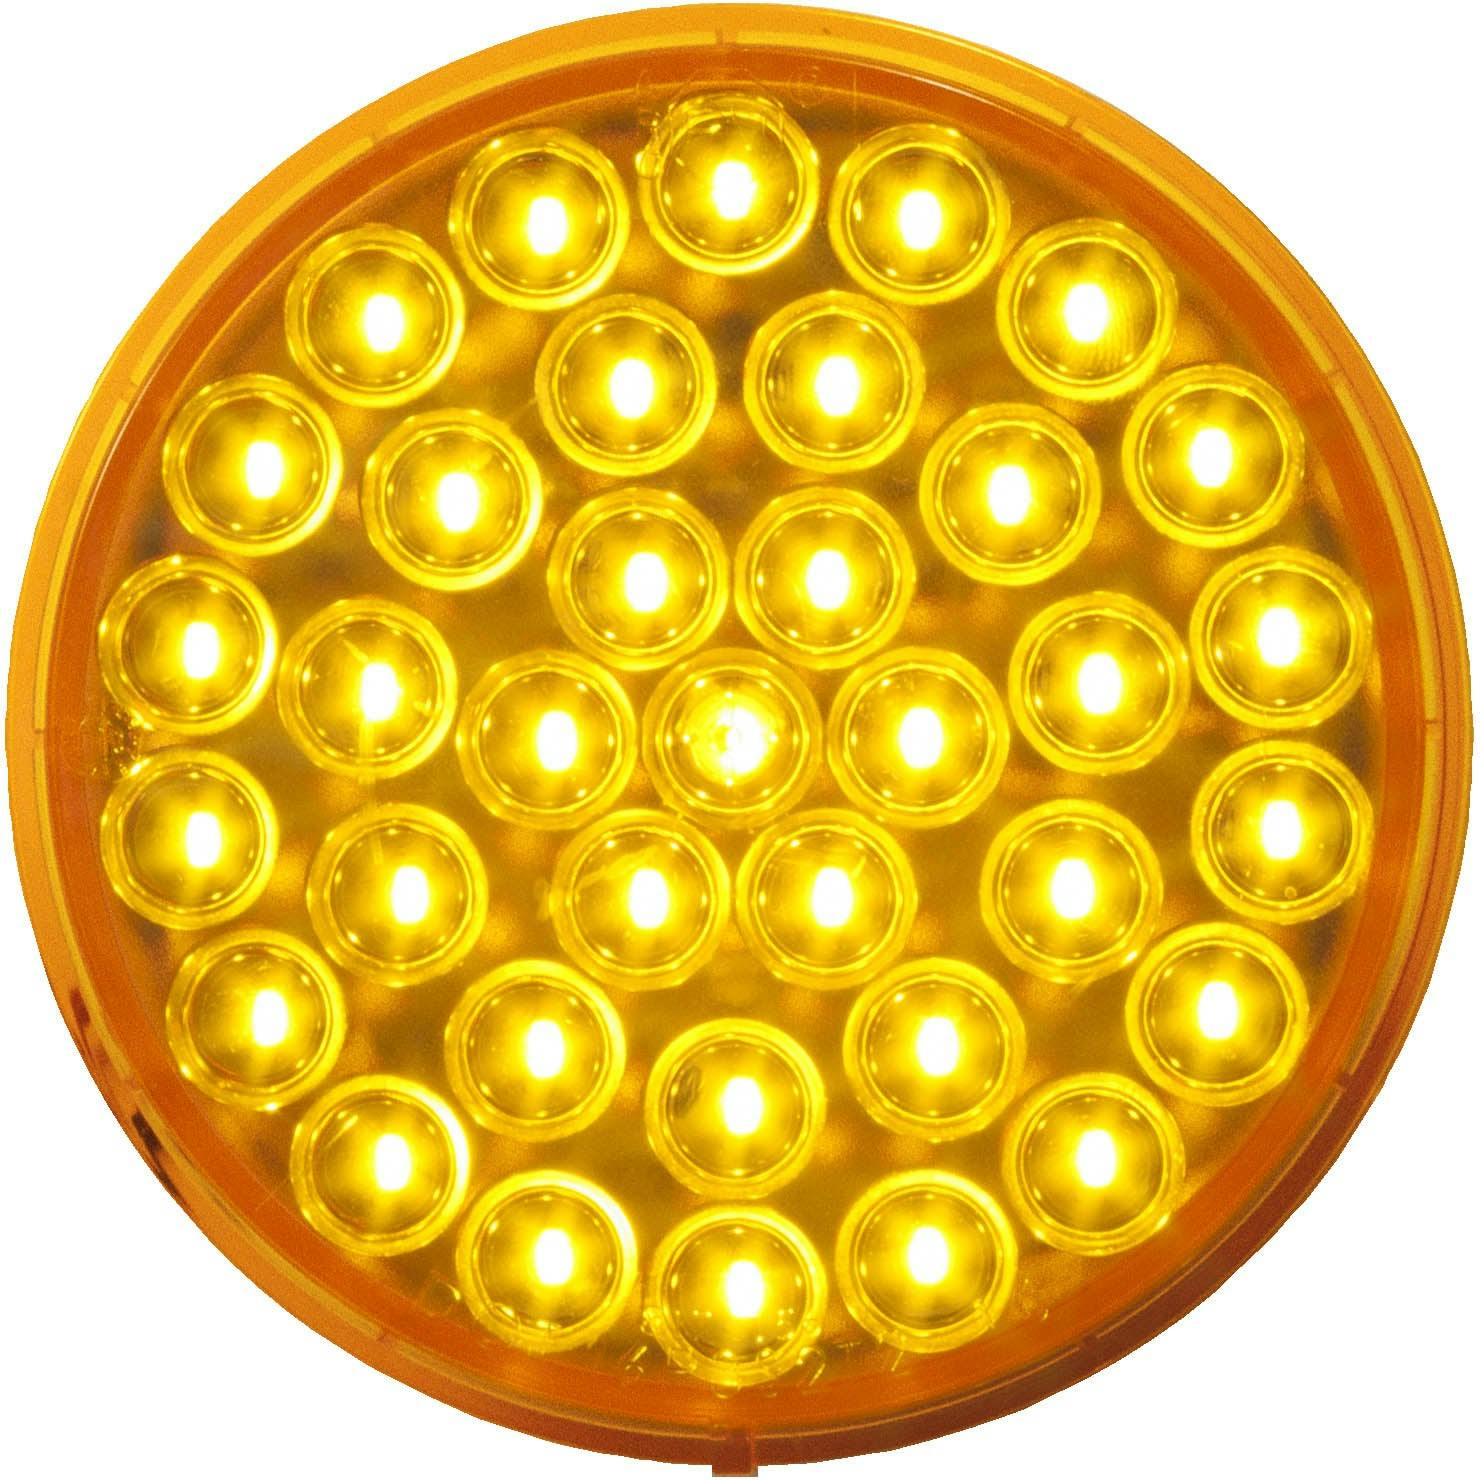 LED Turn Signal, Front & Rear, Round, Grommet-Mount, 4", amber, bulk pack (Pack of 50)